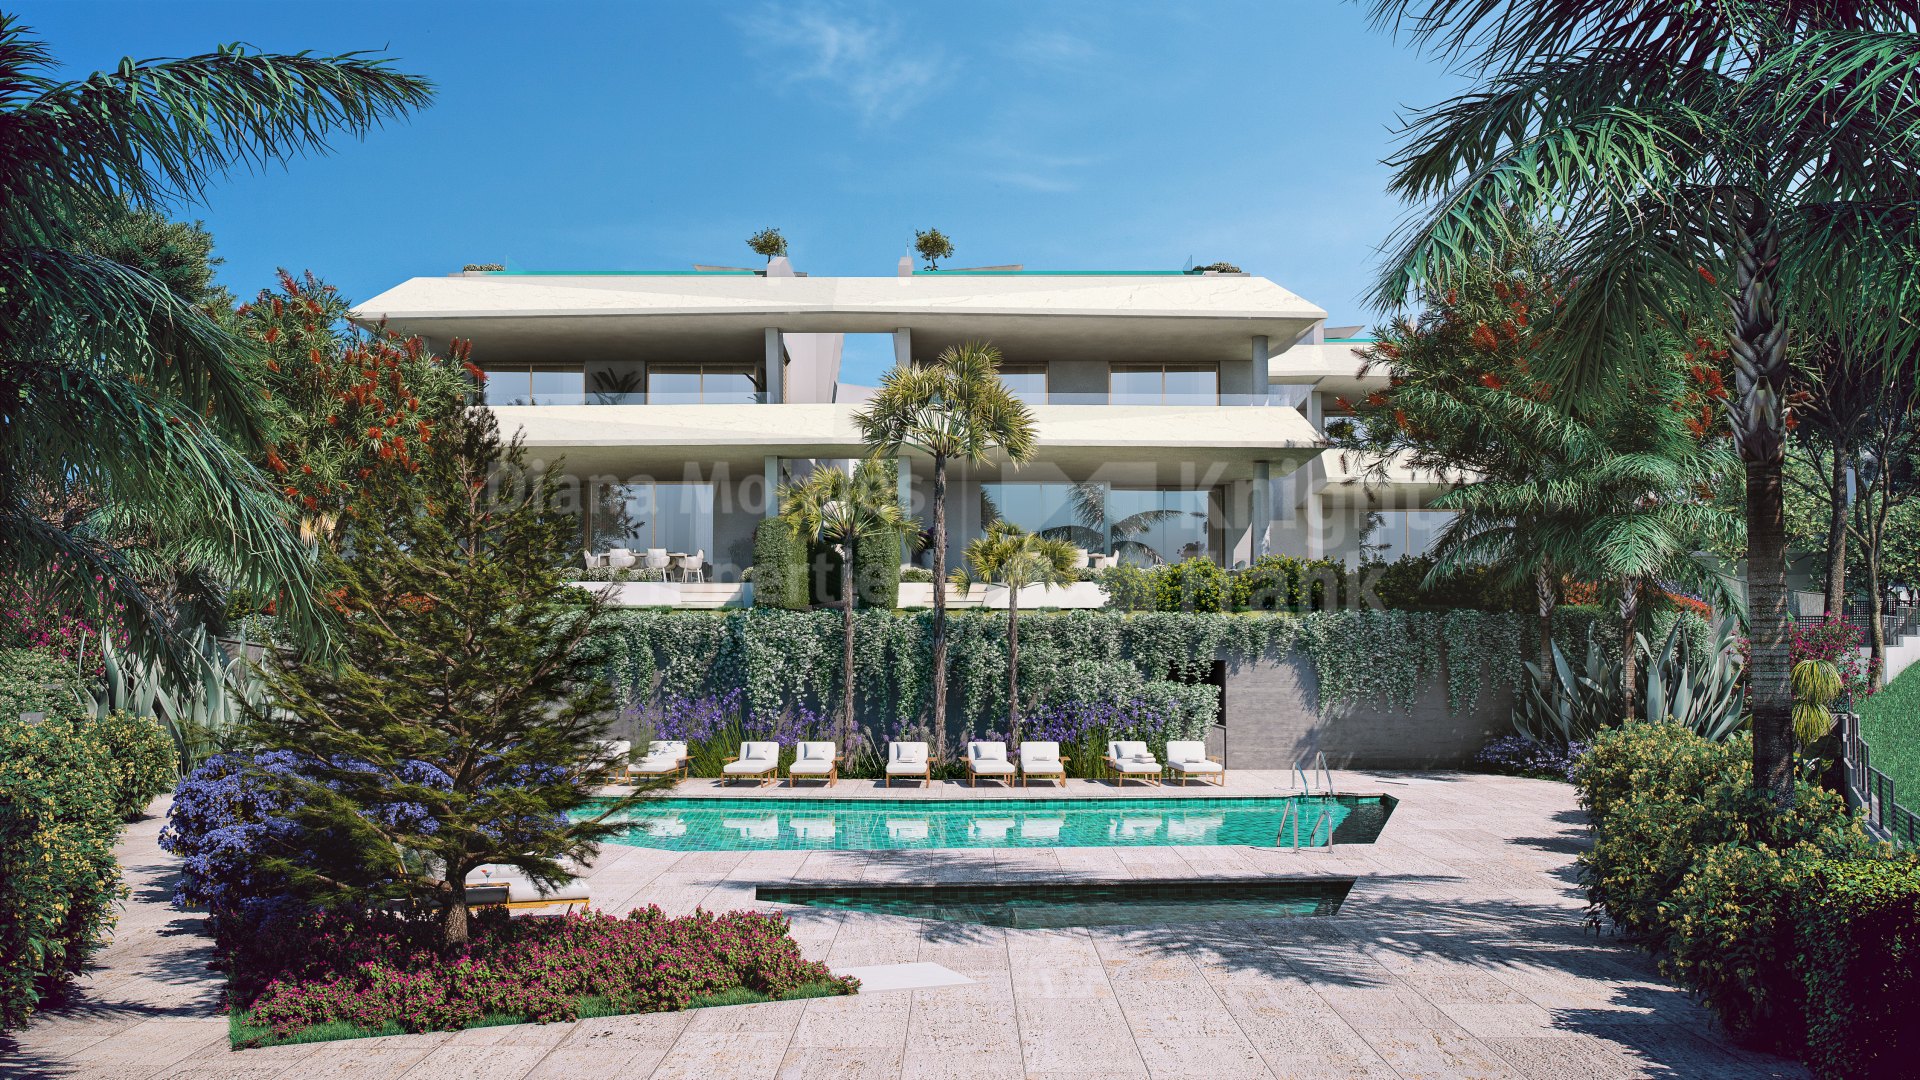 Celeste Marbella, Celeste, residential complex of luxury villas in the heart of Nueva Andalucía